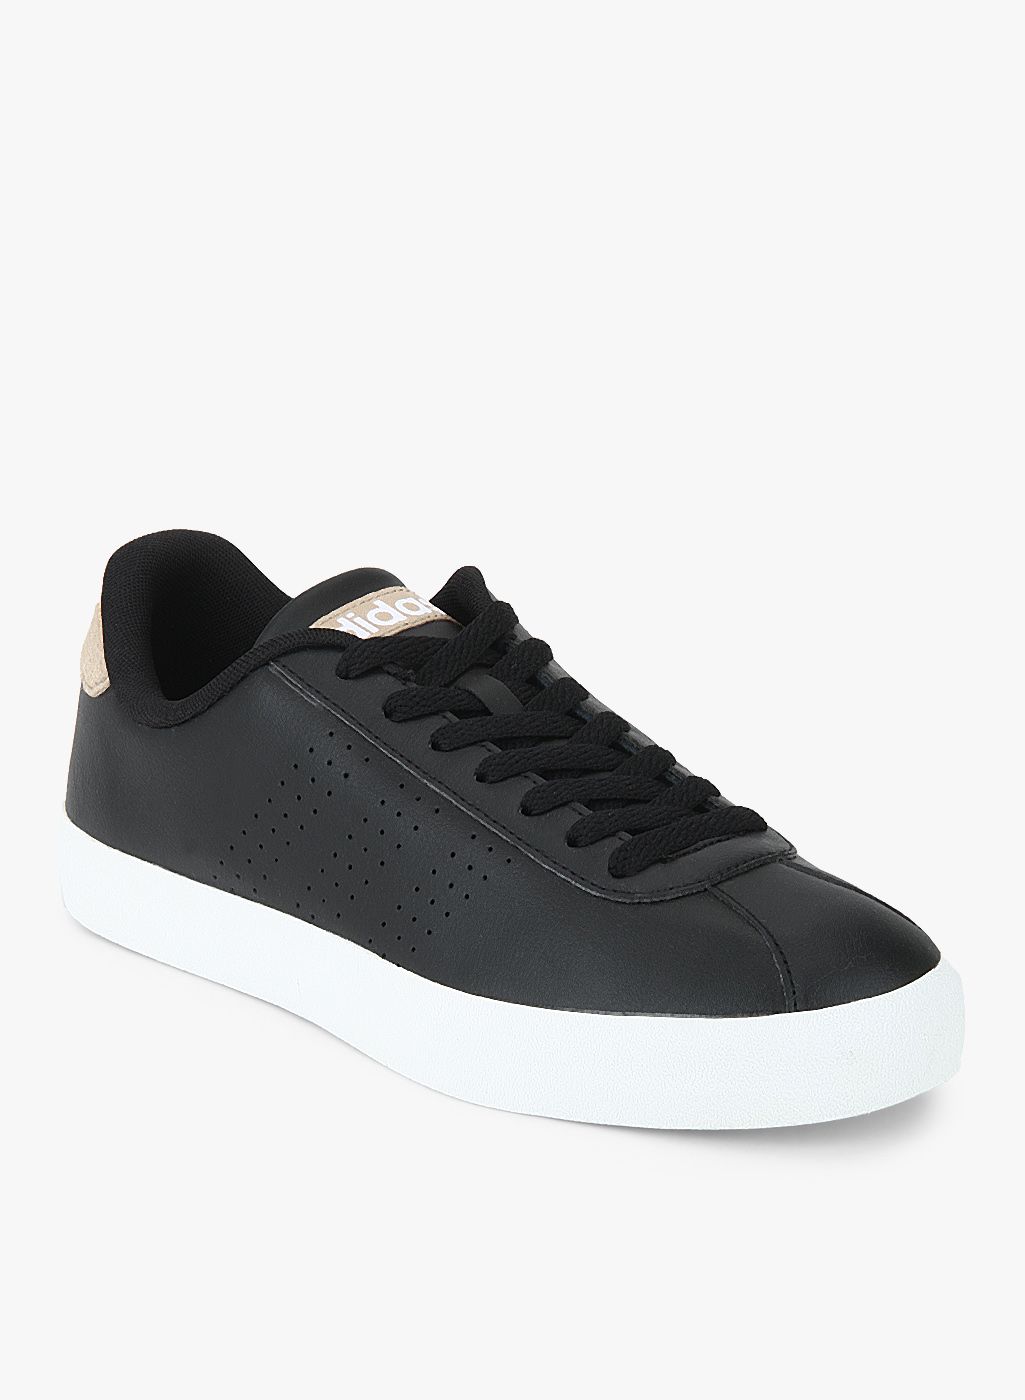 Buy ADIDAS NEO Court Vulc Black Sneakers Online - 5538562 - Jabong